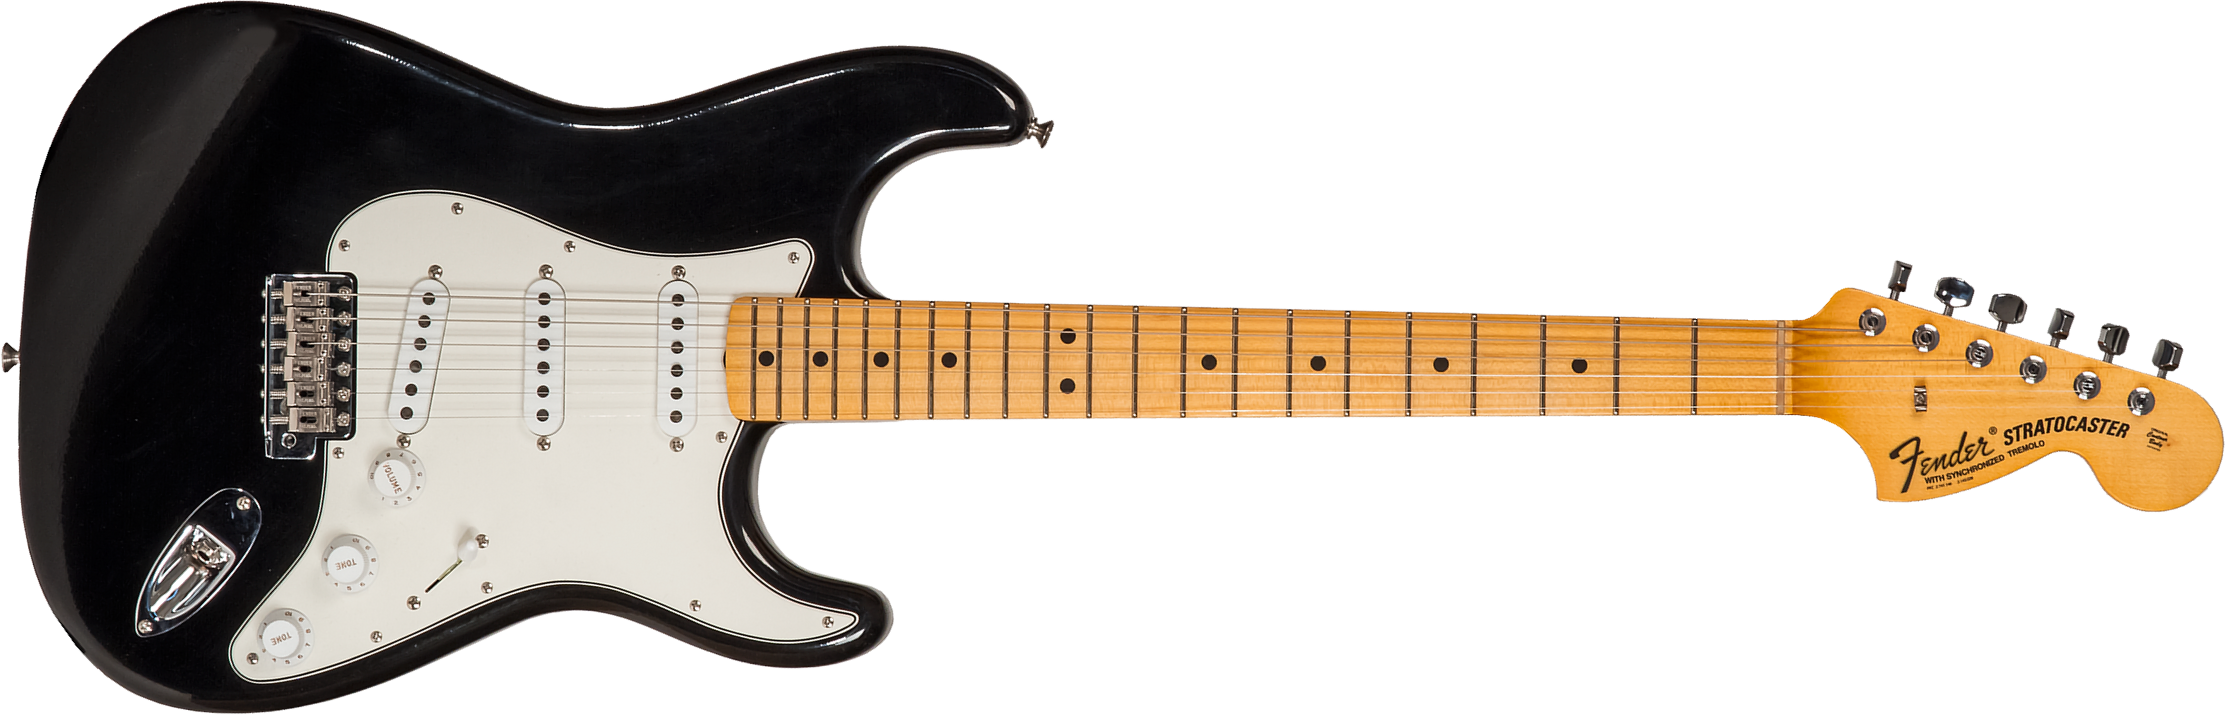 Fender Custom Shop Strat 1969 3s Trem Mn #r127670 - Closet Classic Black - E-Gitarre in Str-Form - Main picture